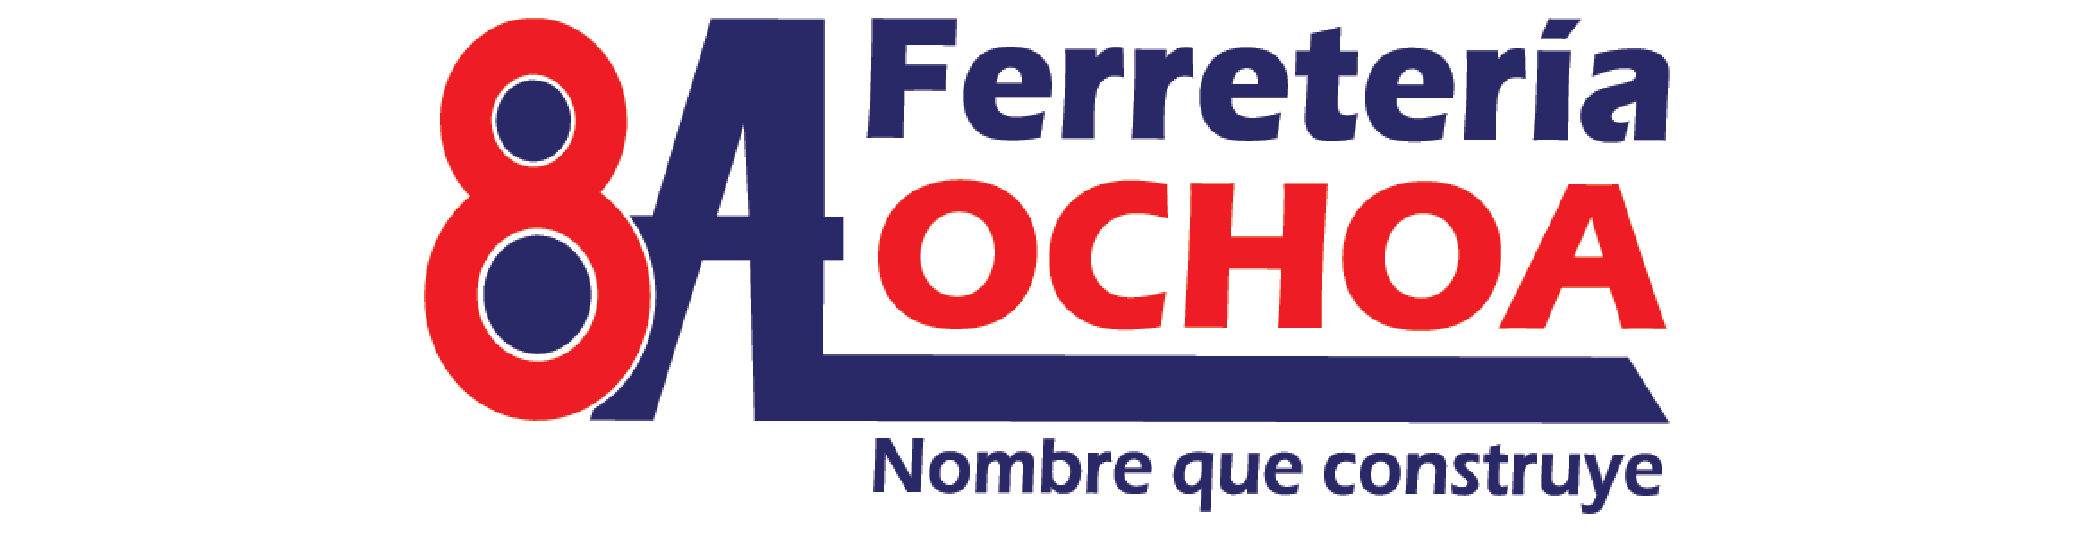 Ferreteria Ochoa